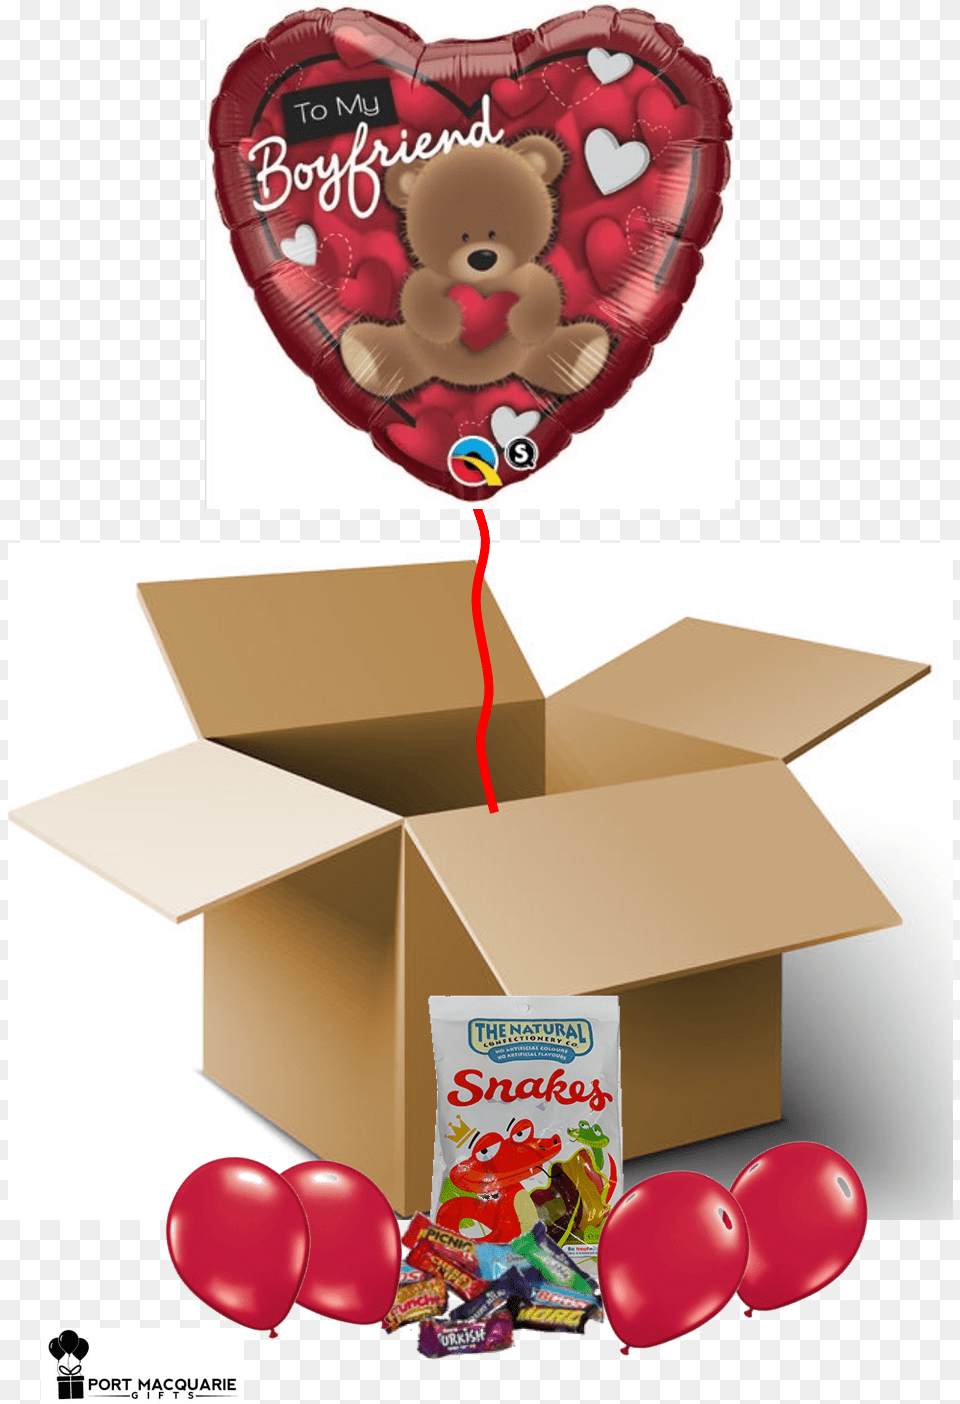 To My Boyfriend Balloon In A Box Balloon, Cardboard, Carton Png Image